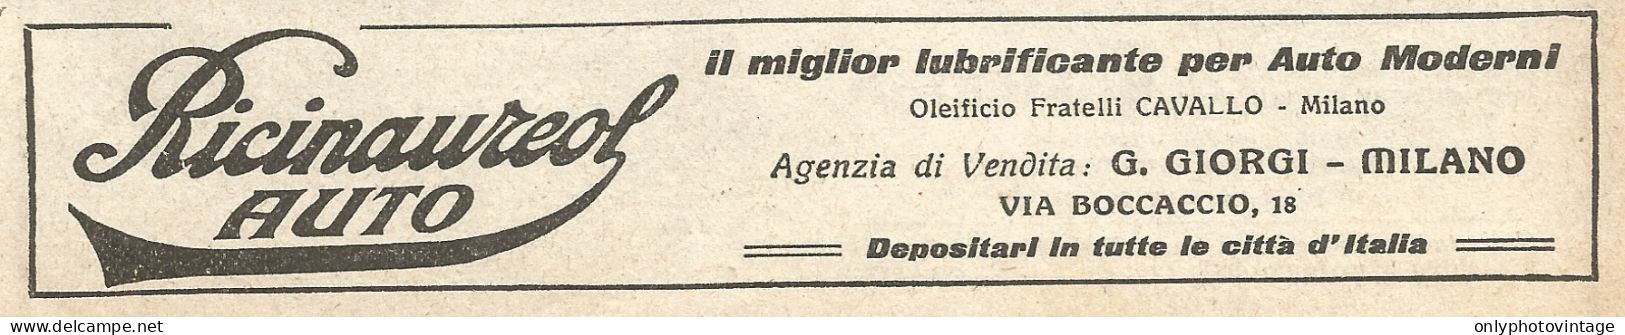 Lubrificante RICINAUREOL Auto - Pubblicità Del 1923 - Vintage Advertising - Advertising